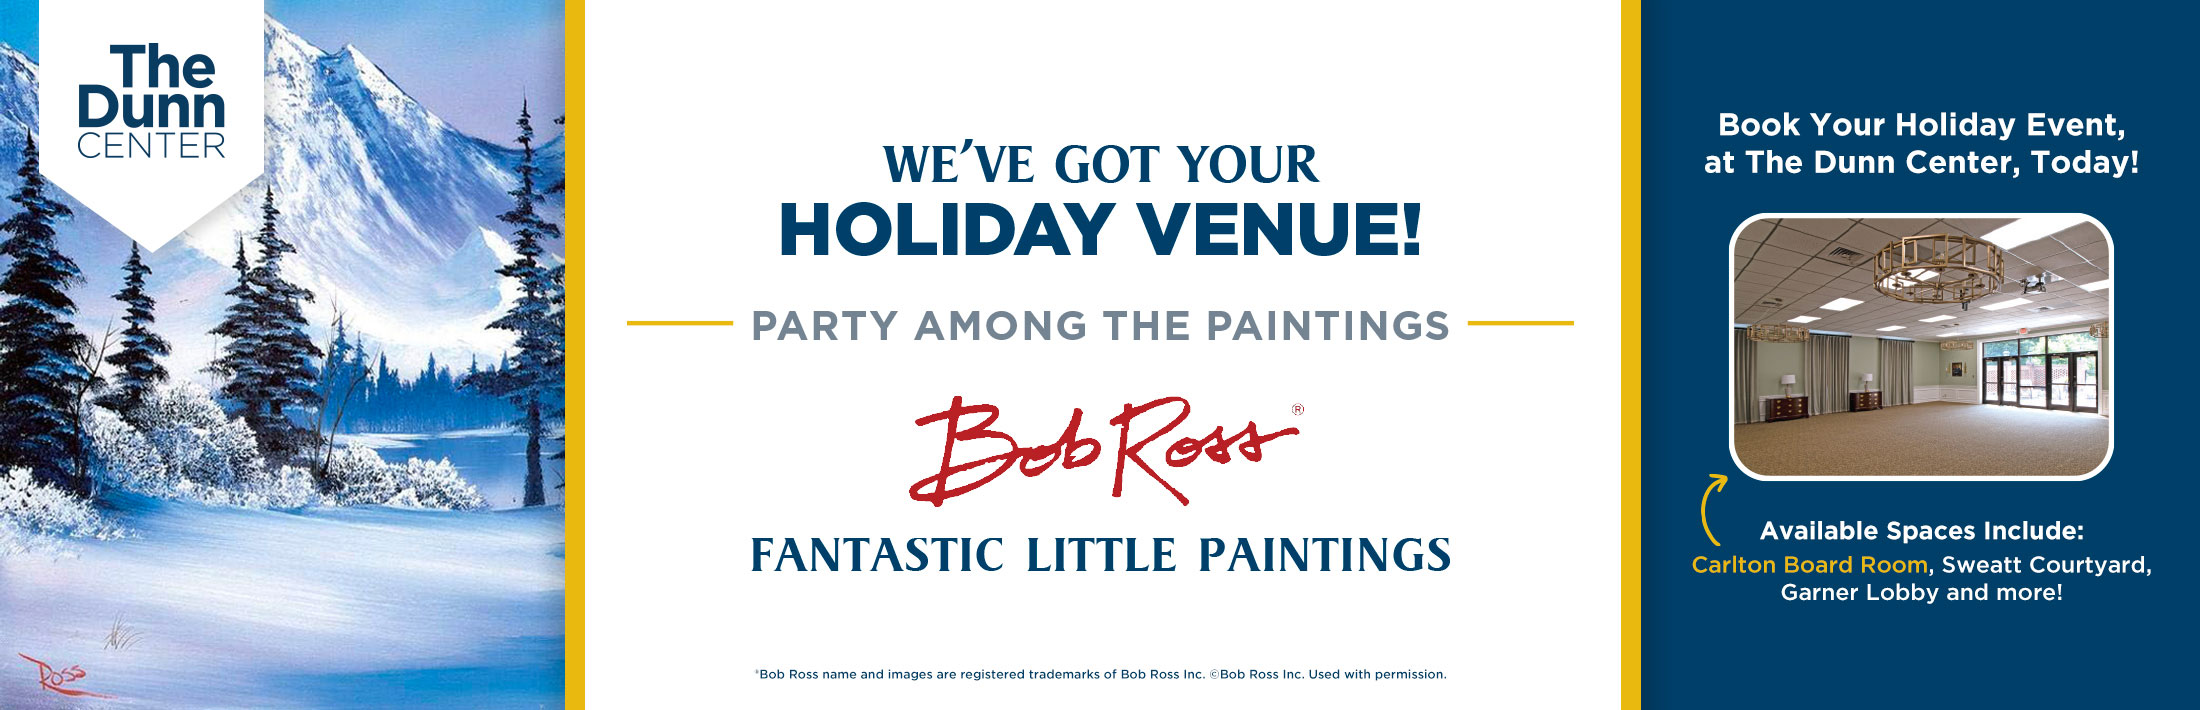 bob ross holiday event rental